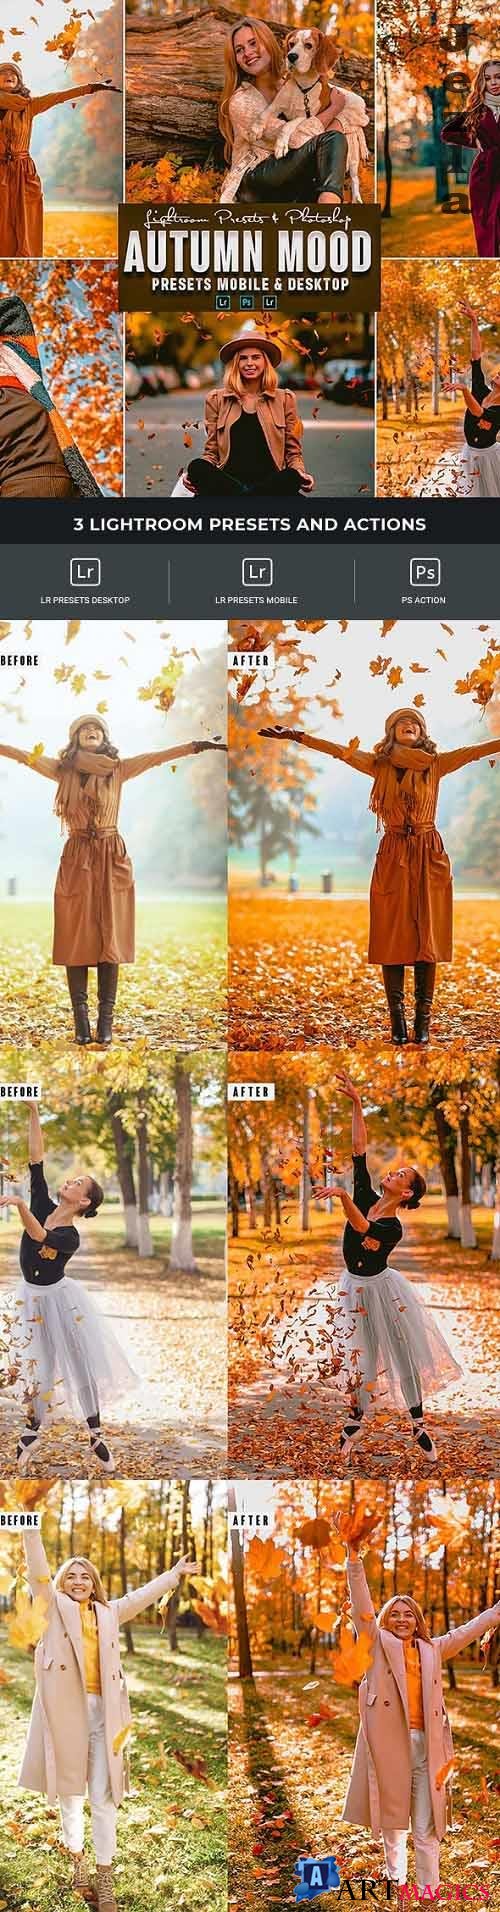 Autumn Photoshop Action & Lightrom Presets - 34298026